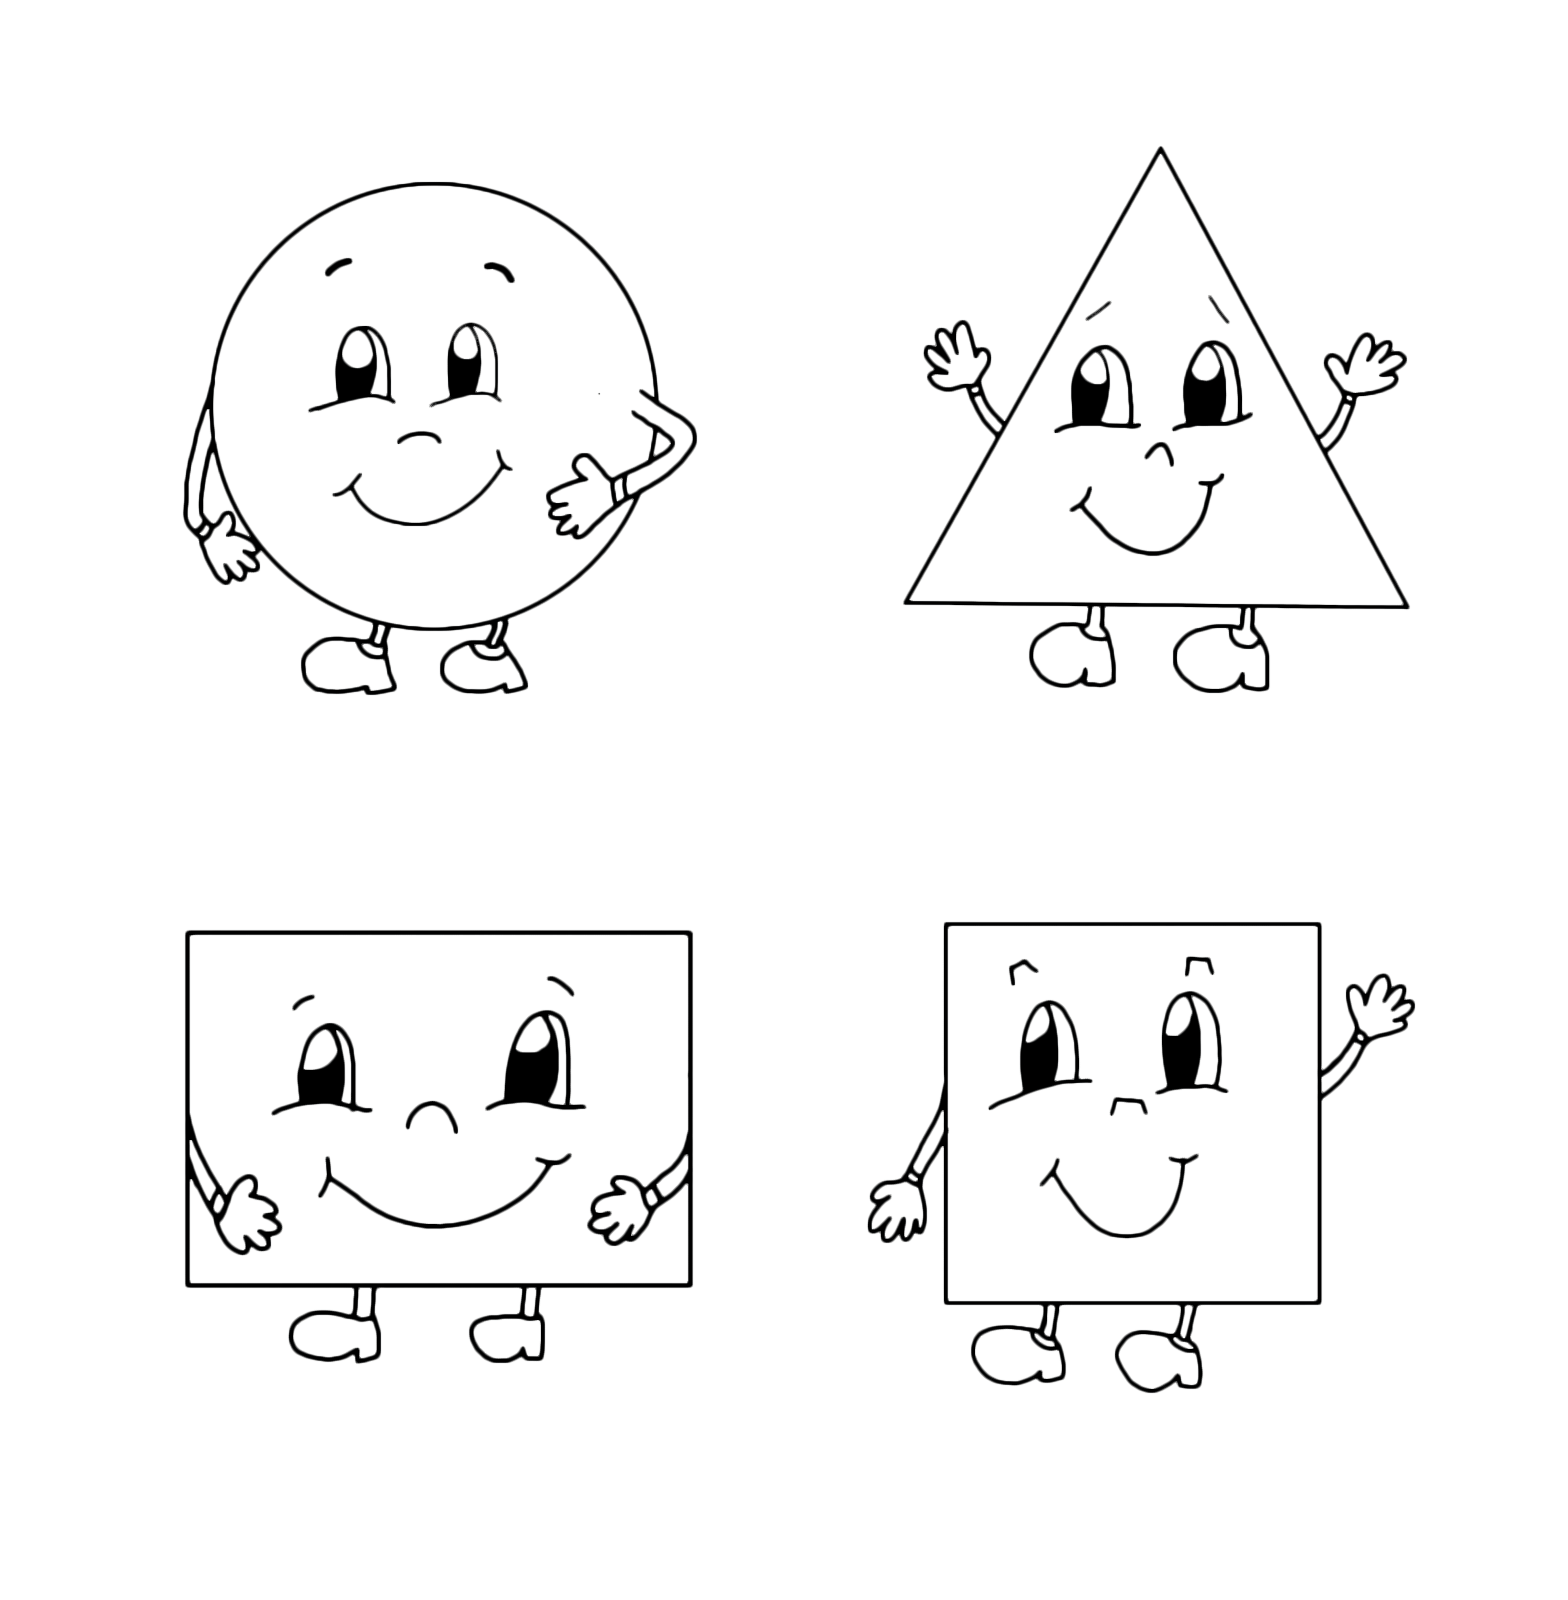 Figure geometriche - Cerchi triangoli rettangoli e quadrati